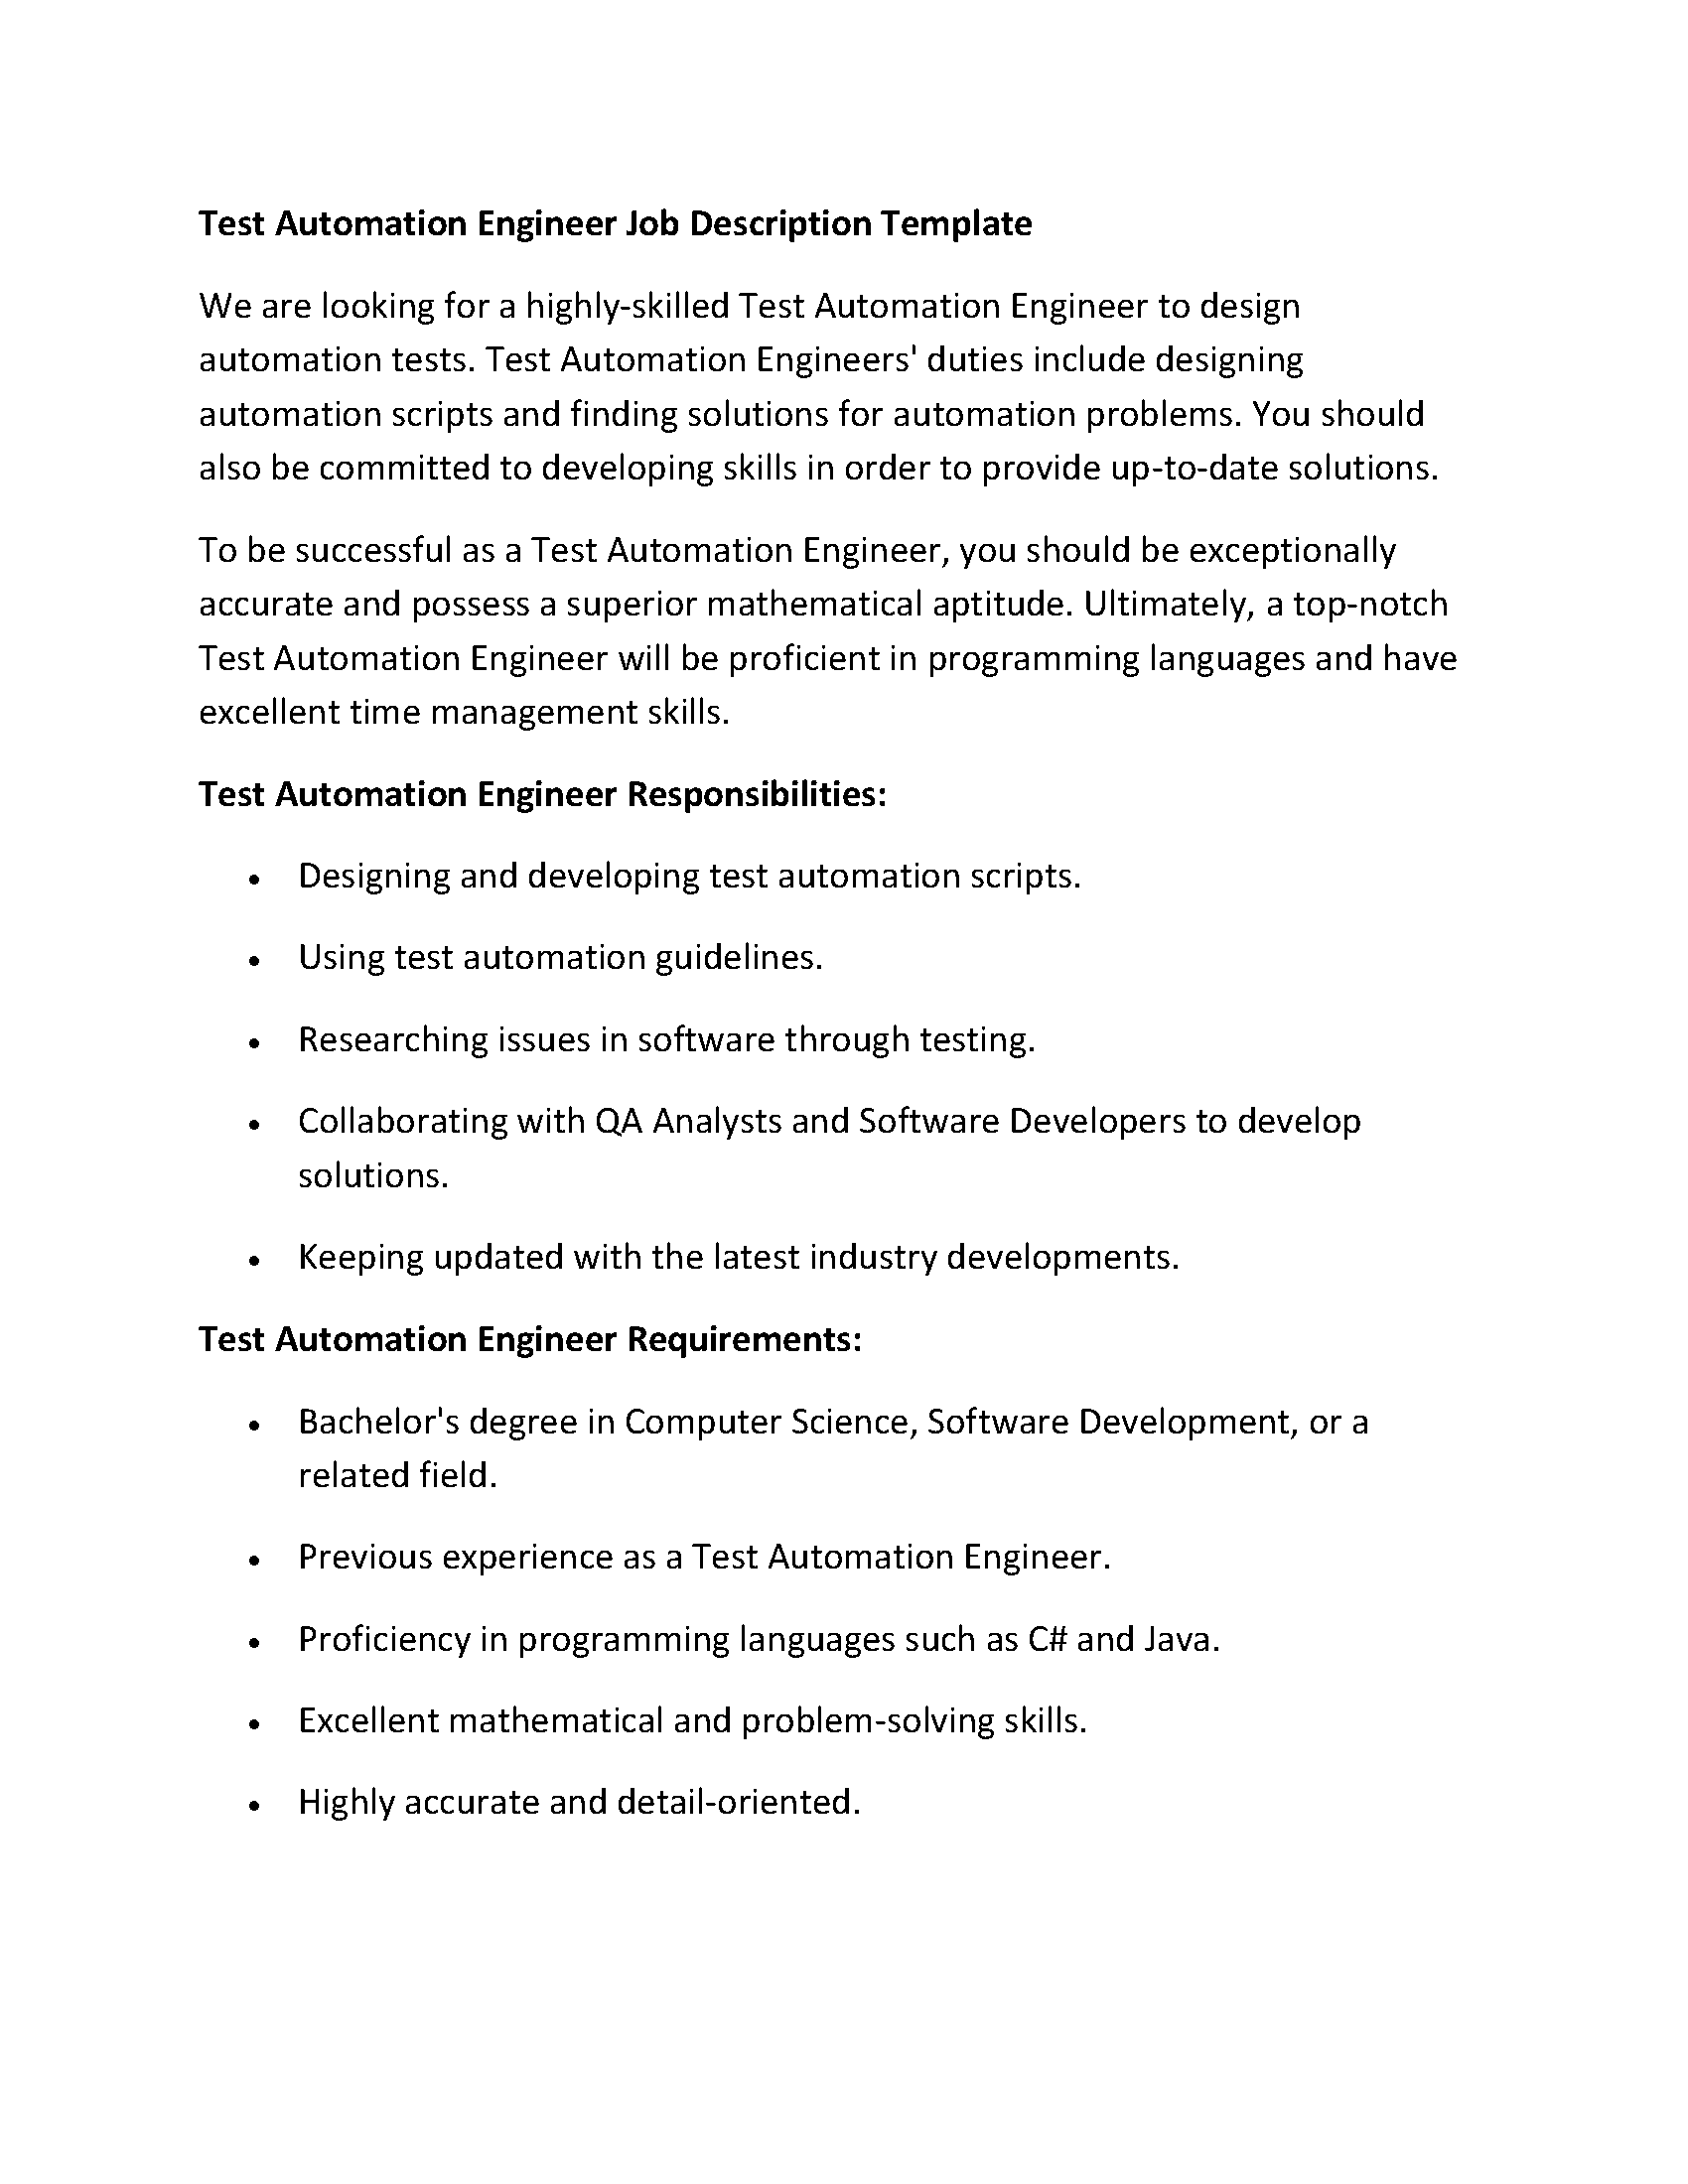 Test Automation Engineer Job Description Template